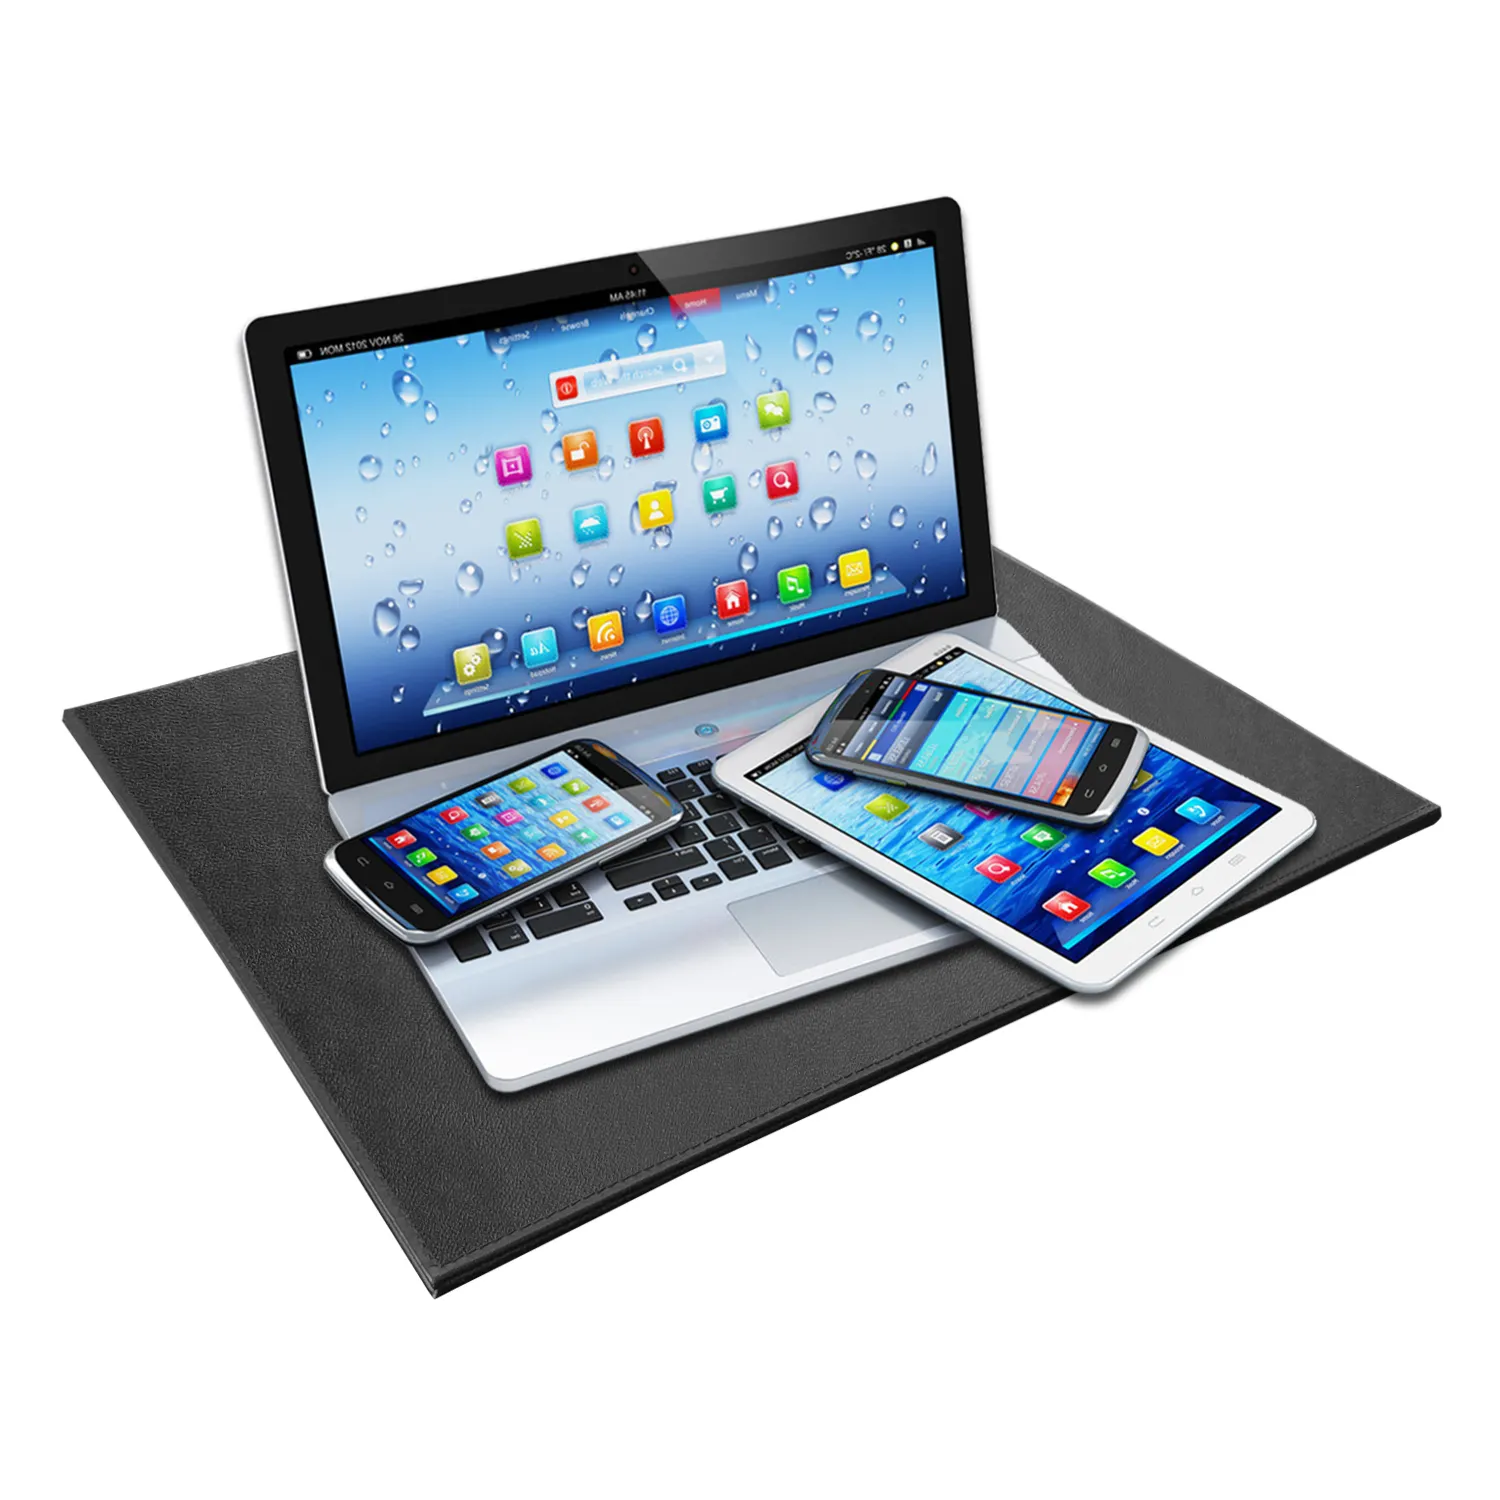 Emf Bescherming Straling & Emf Straling Shield Warmte Bescherming Pad Voor Laptop